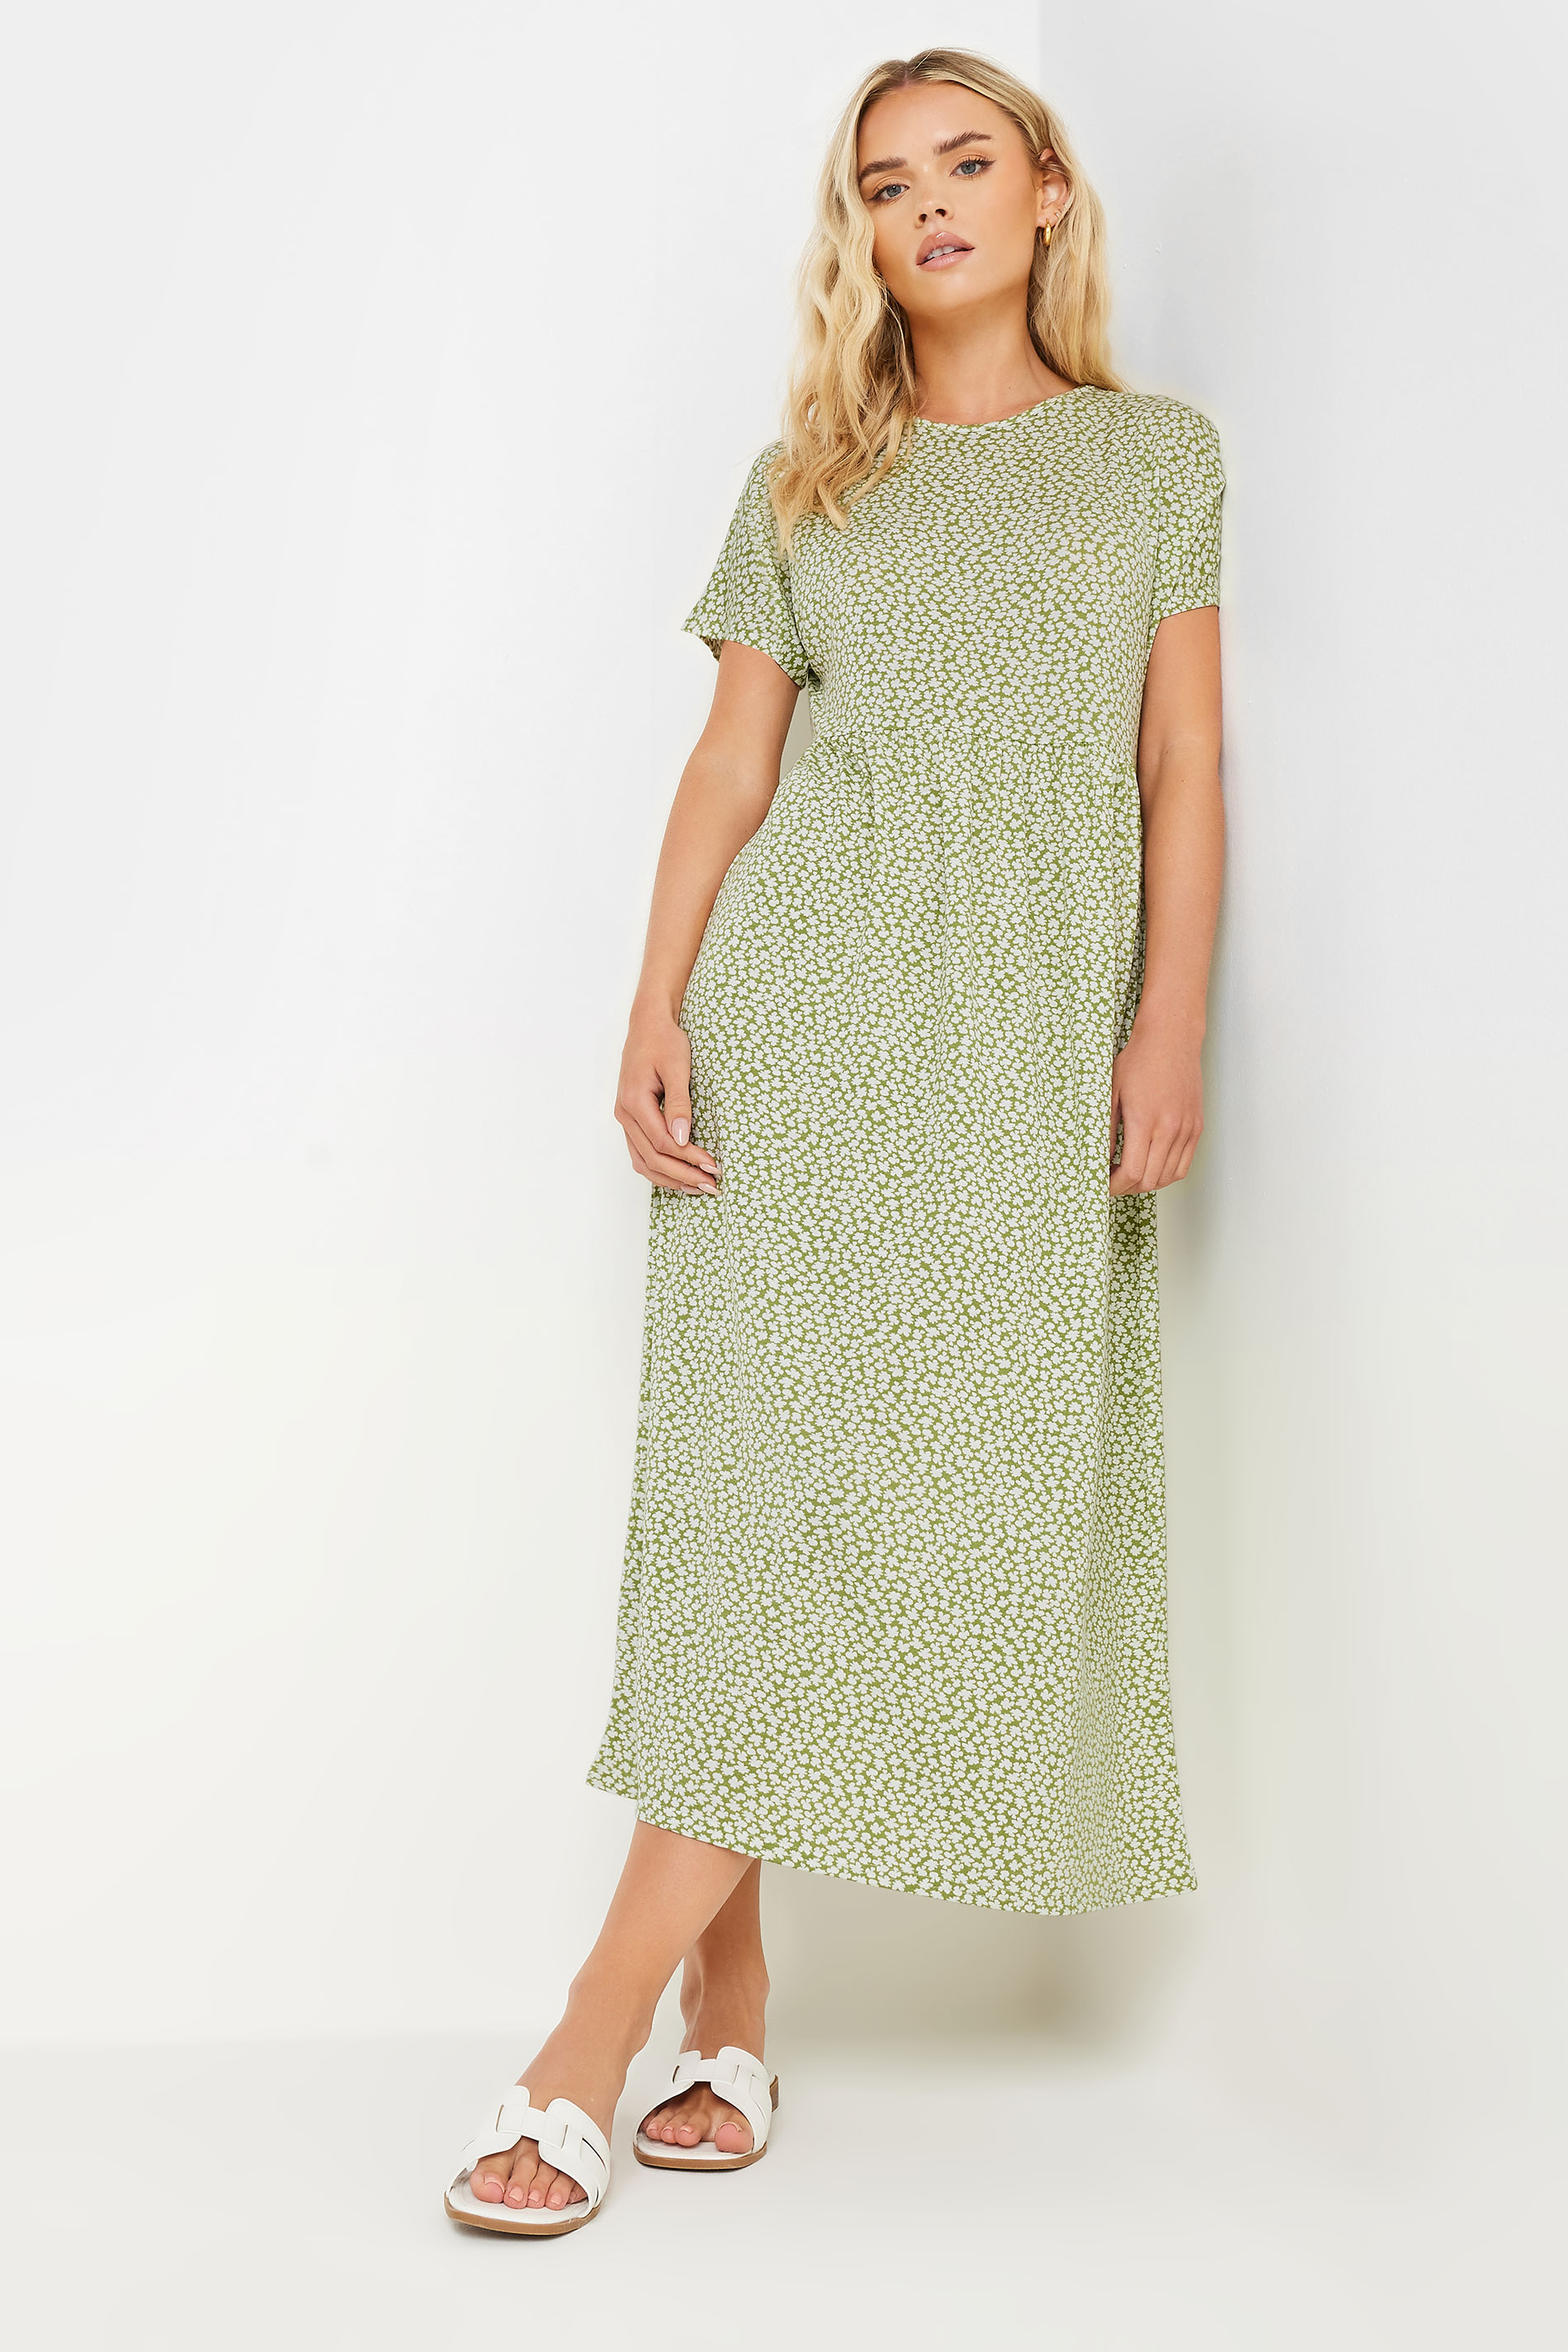 PixieGirl Petite Women's Sage Green Ditsy Floral Print Midi Smock Dress | PixieGirl 1